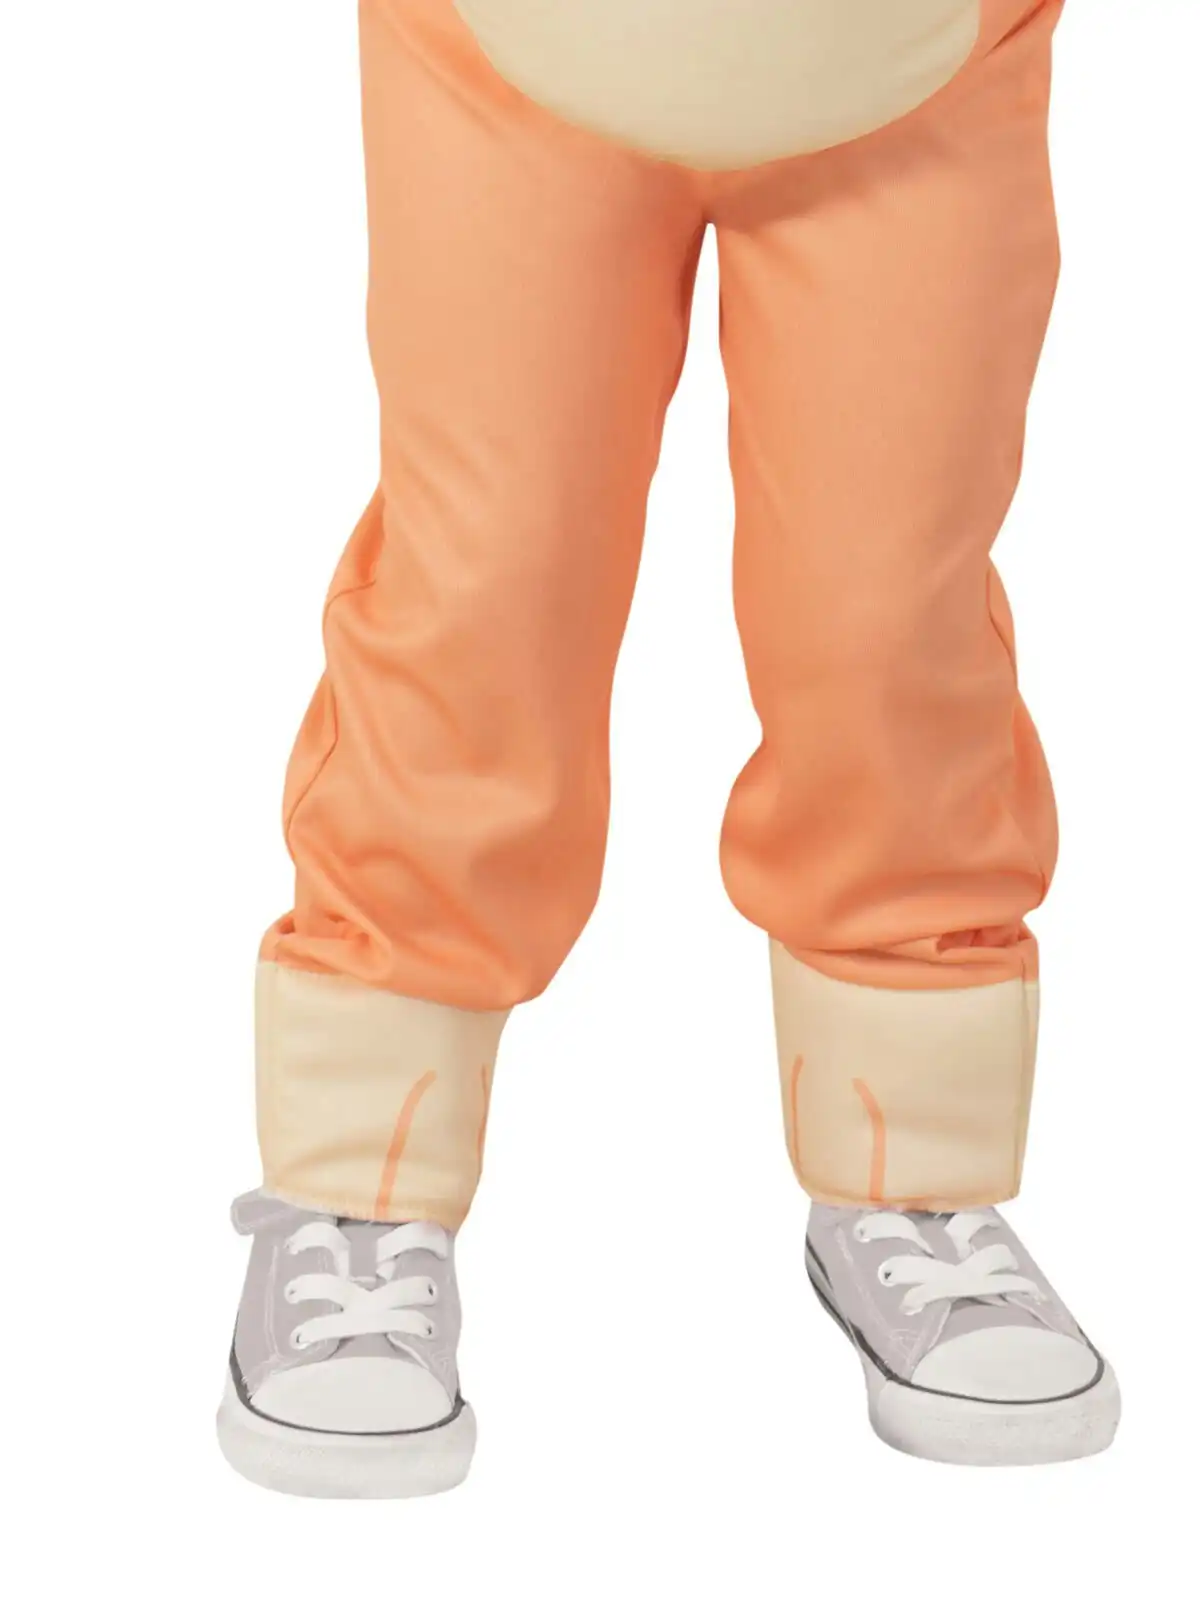 Disney Bluey Cartoon Character Bingo Deluxe Dress Up Costume - Size Baby/Toddler